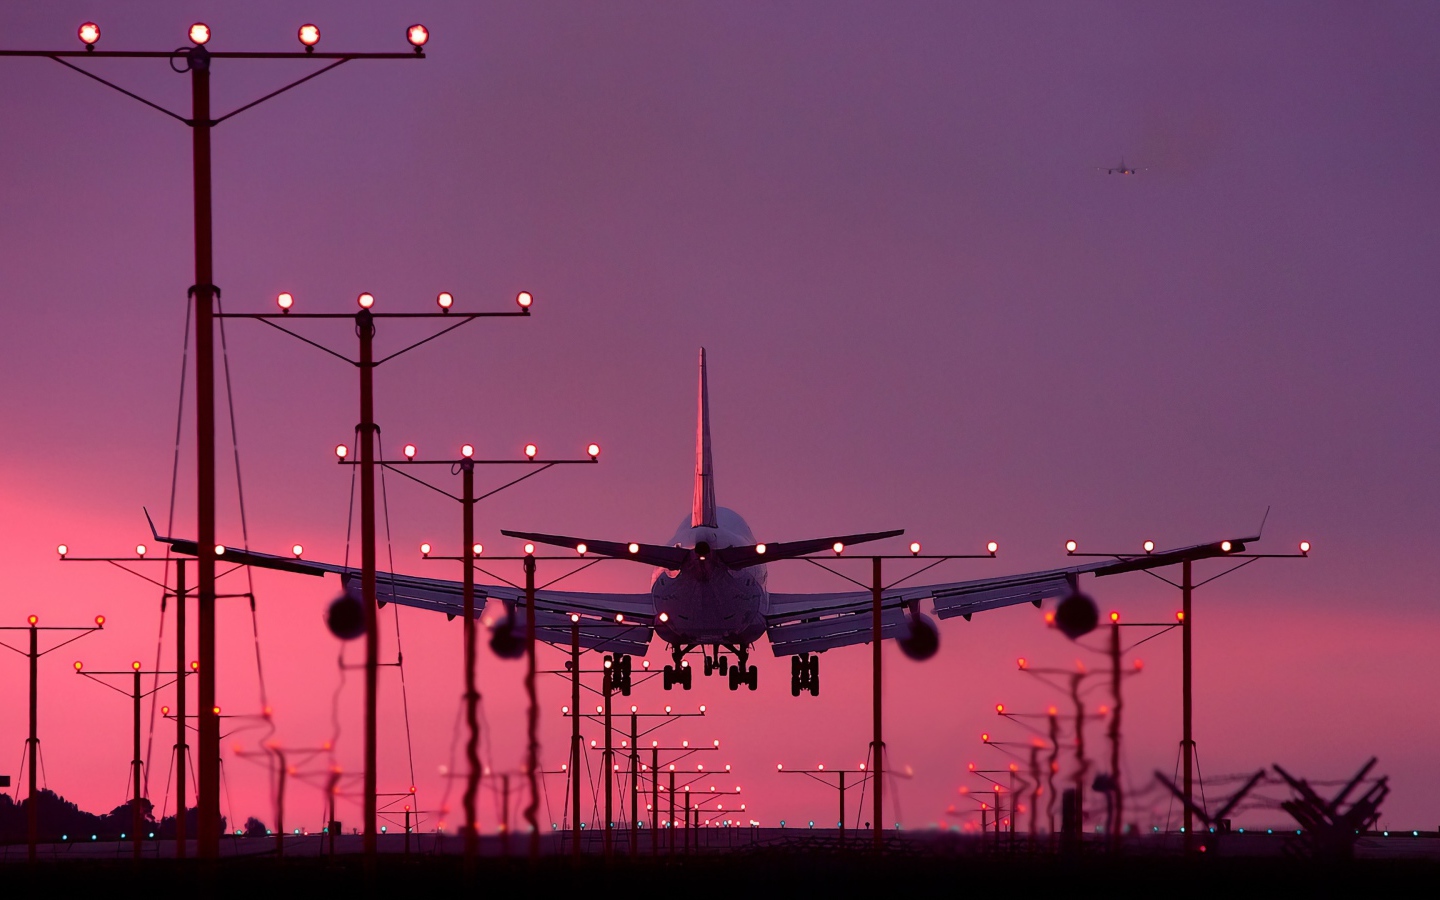 A passenger plane is landing at sunset